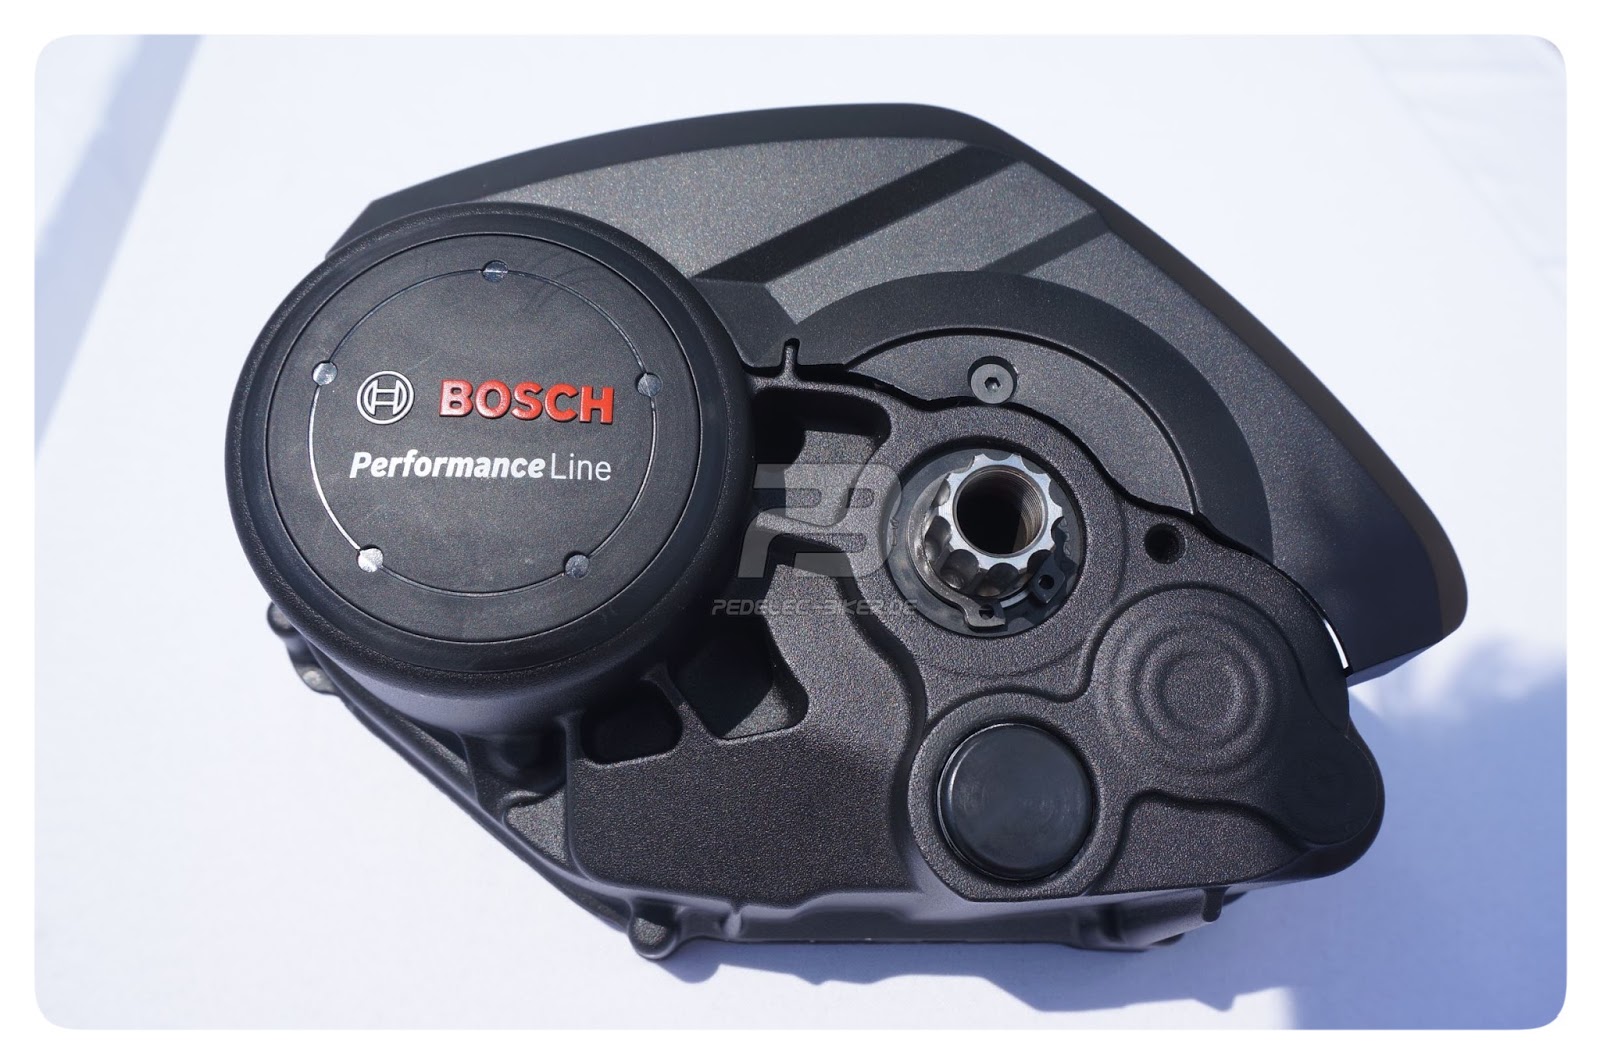 Bosch_2015_ebike_system_2